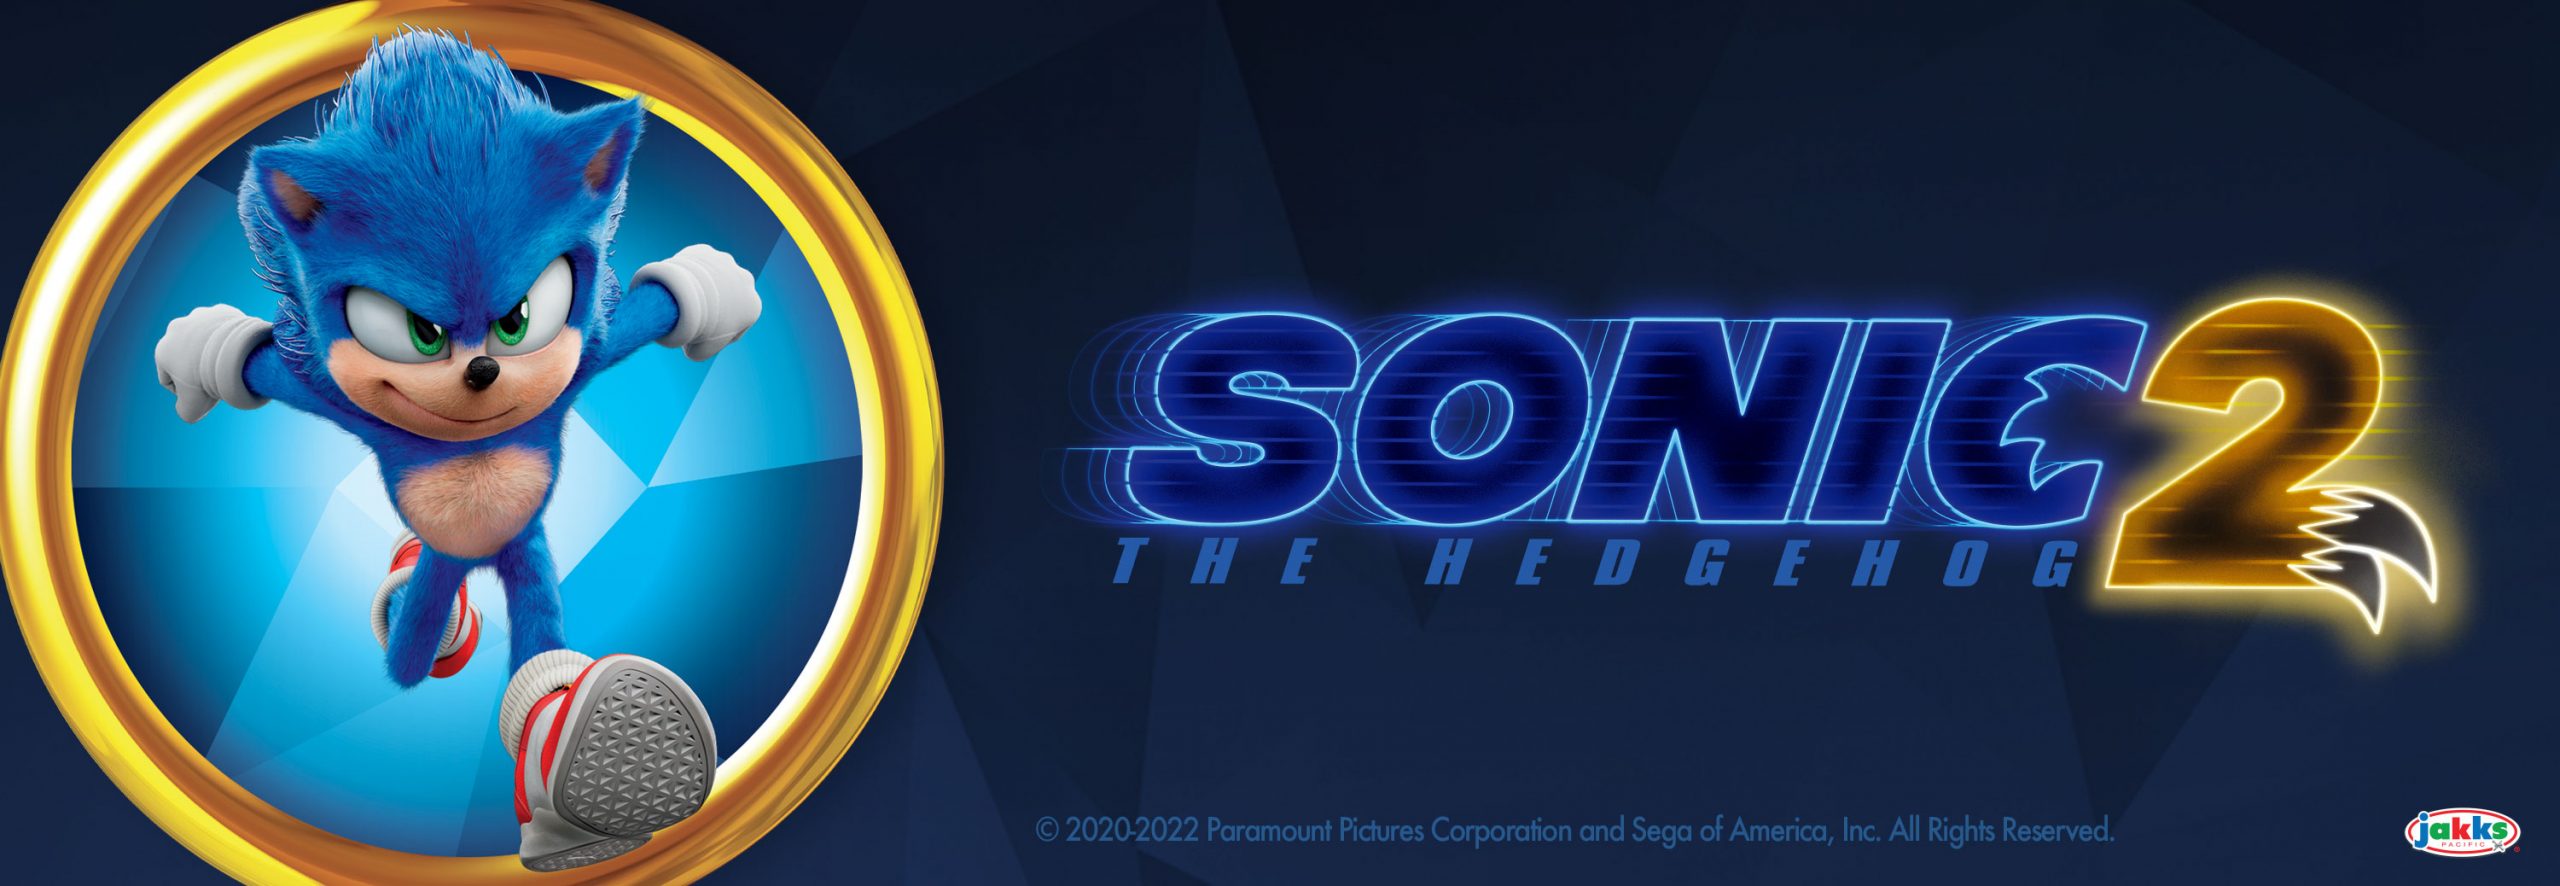 Sonic 2 Banner